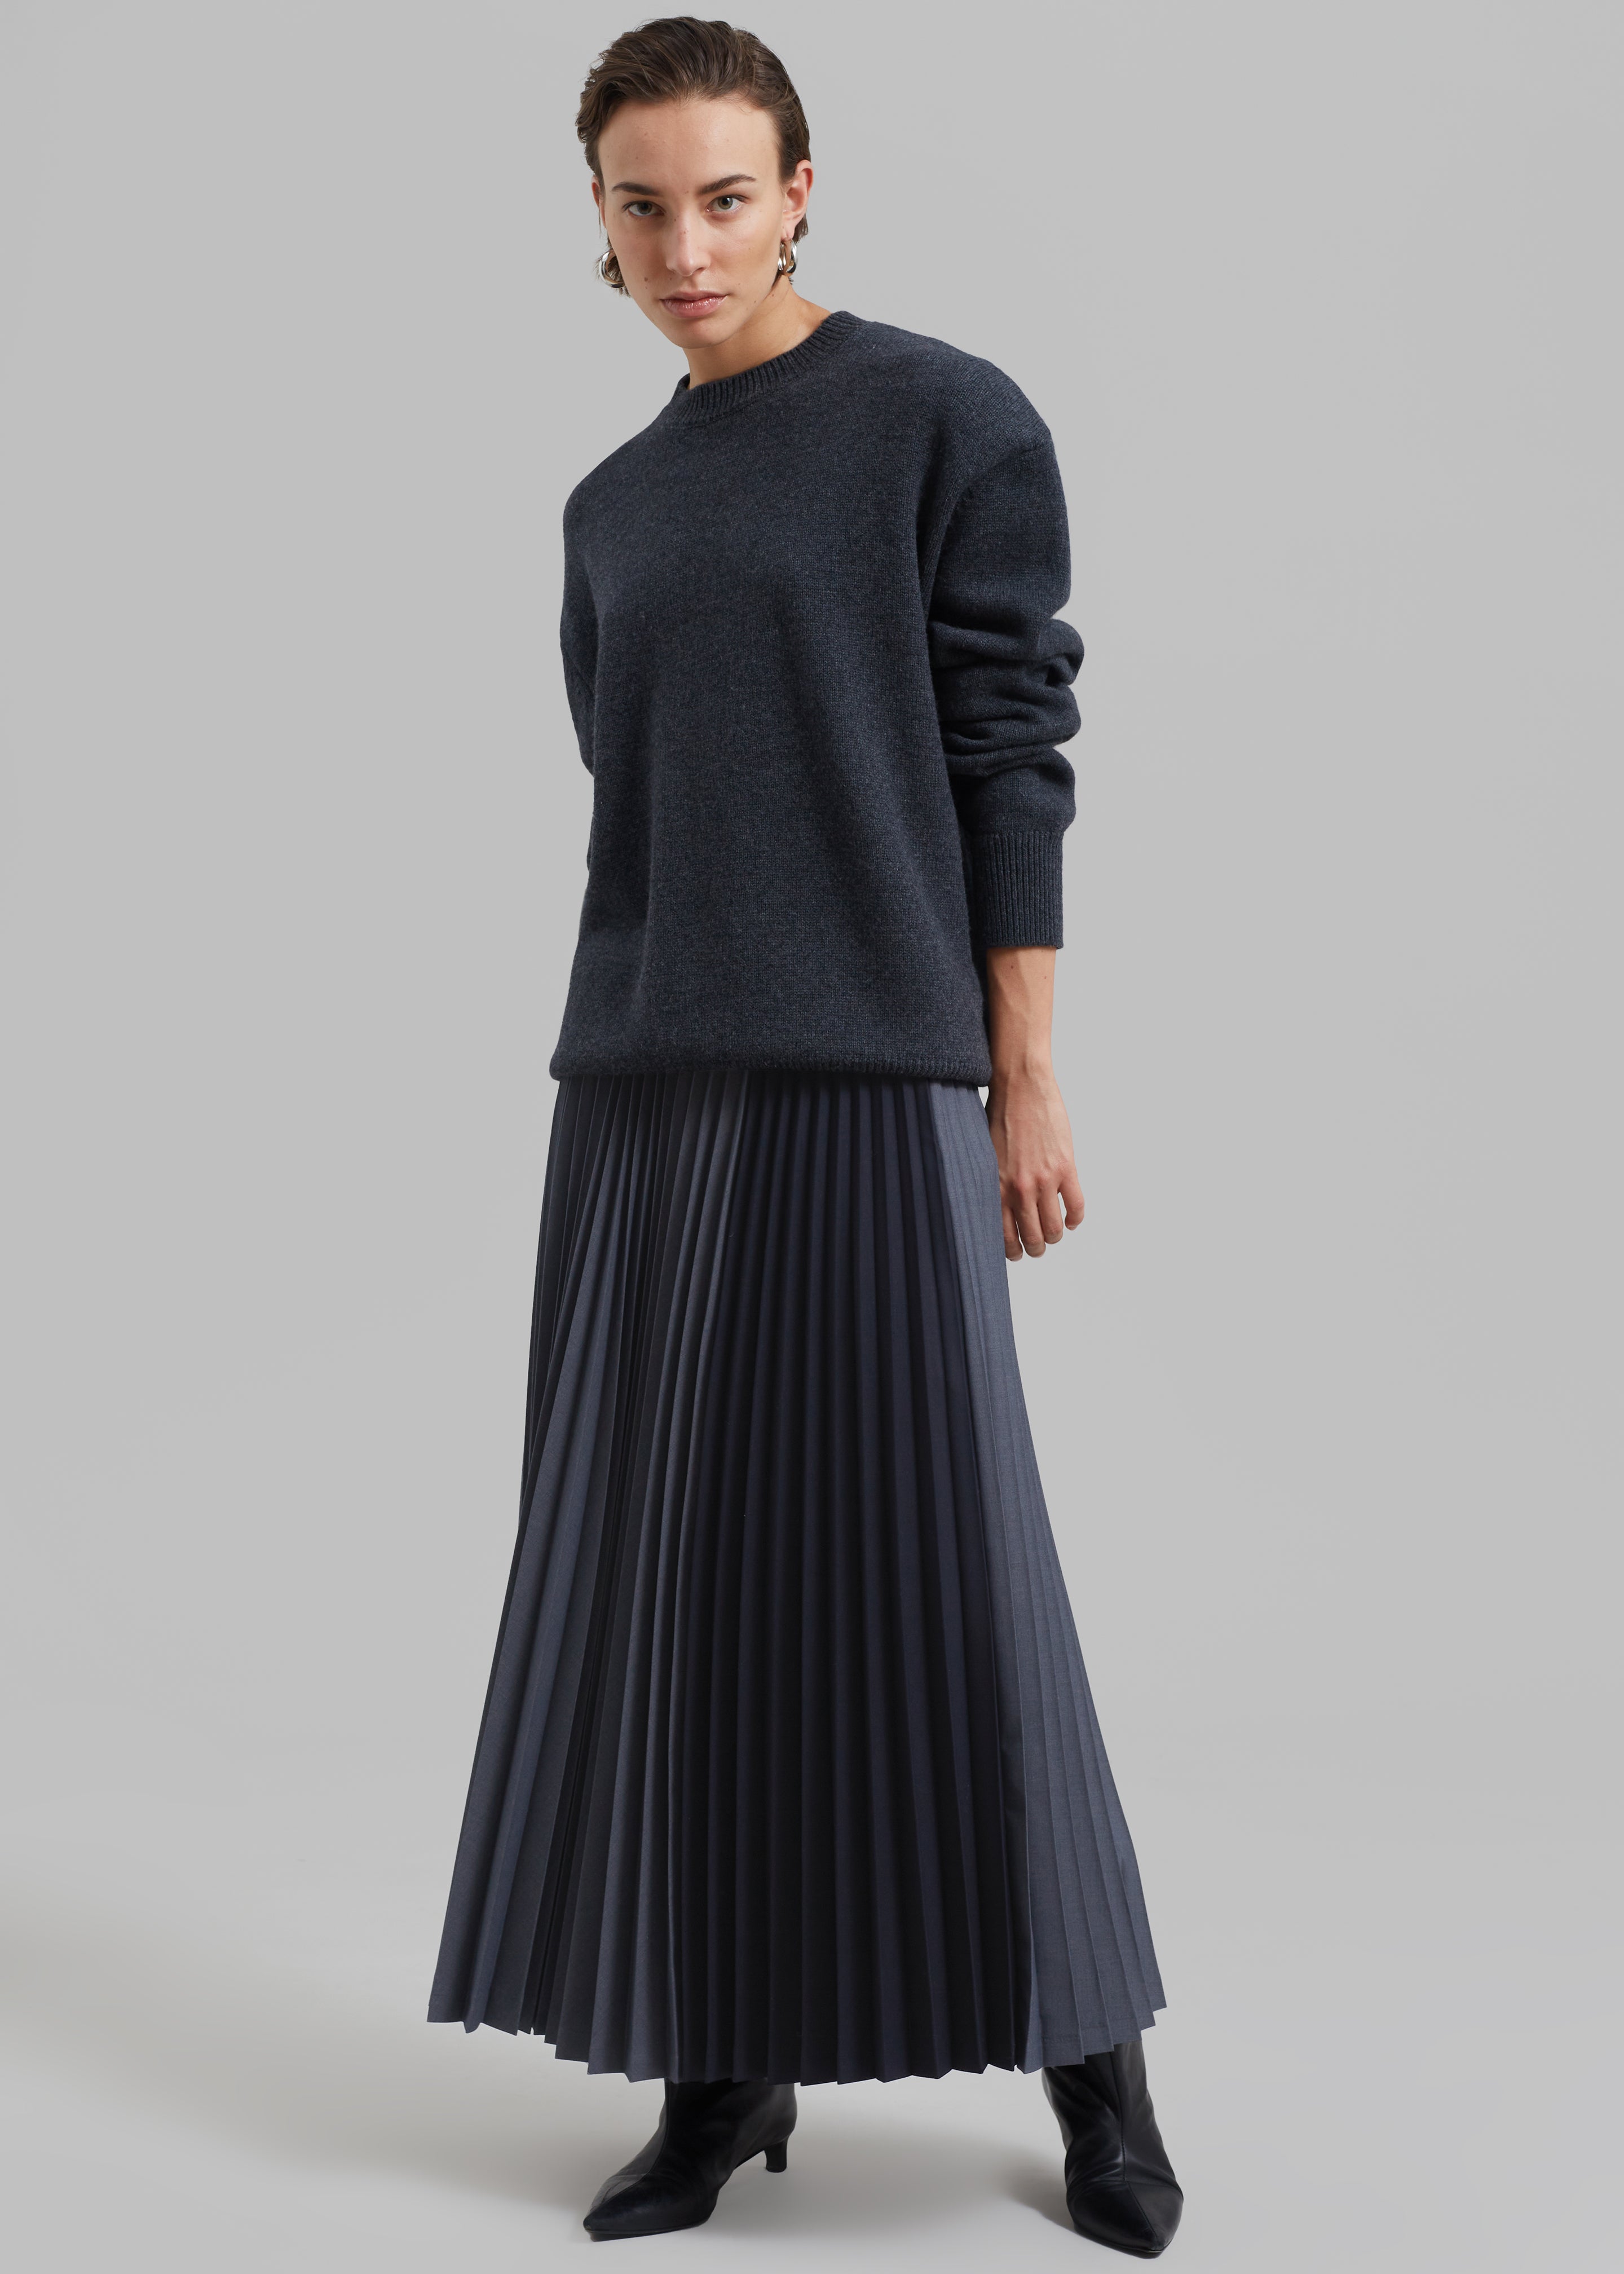 Orem Pleated Skirt - Charcoal - 1